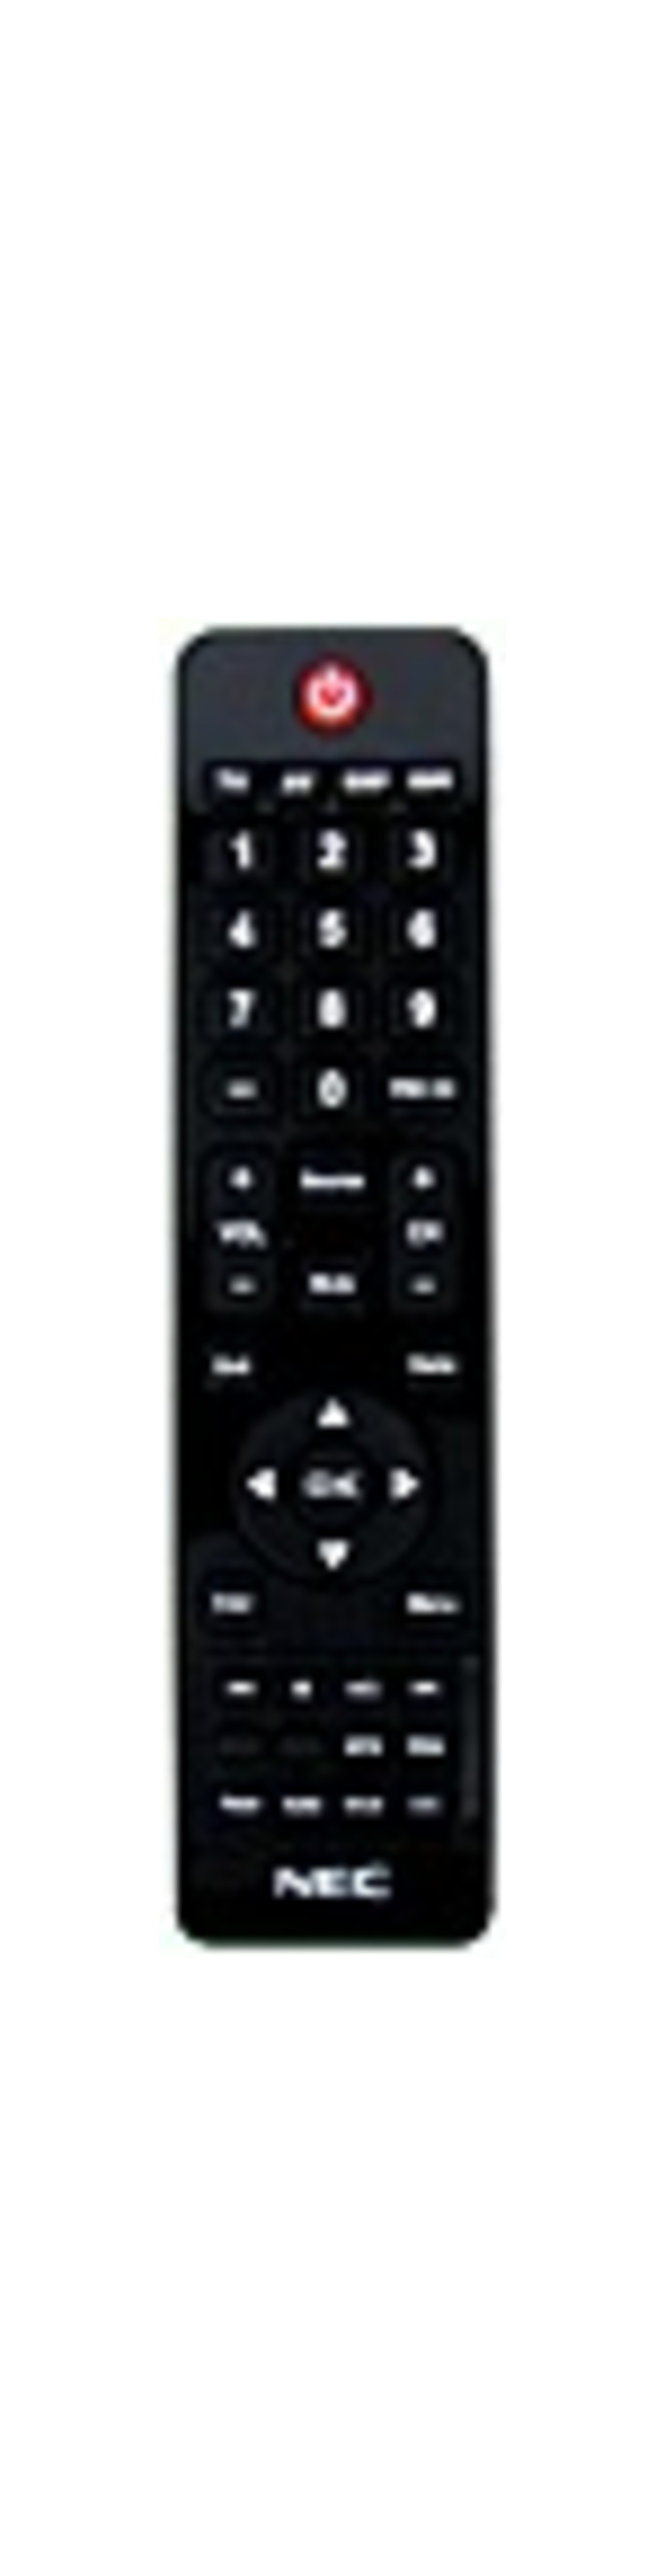 NEC 398GR10BENE00C Remote Control - For GT5000 / GT6000 / XT5100 Projectors